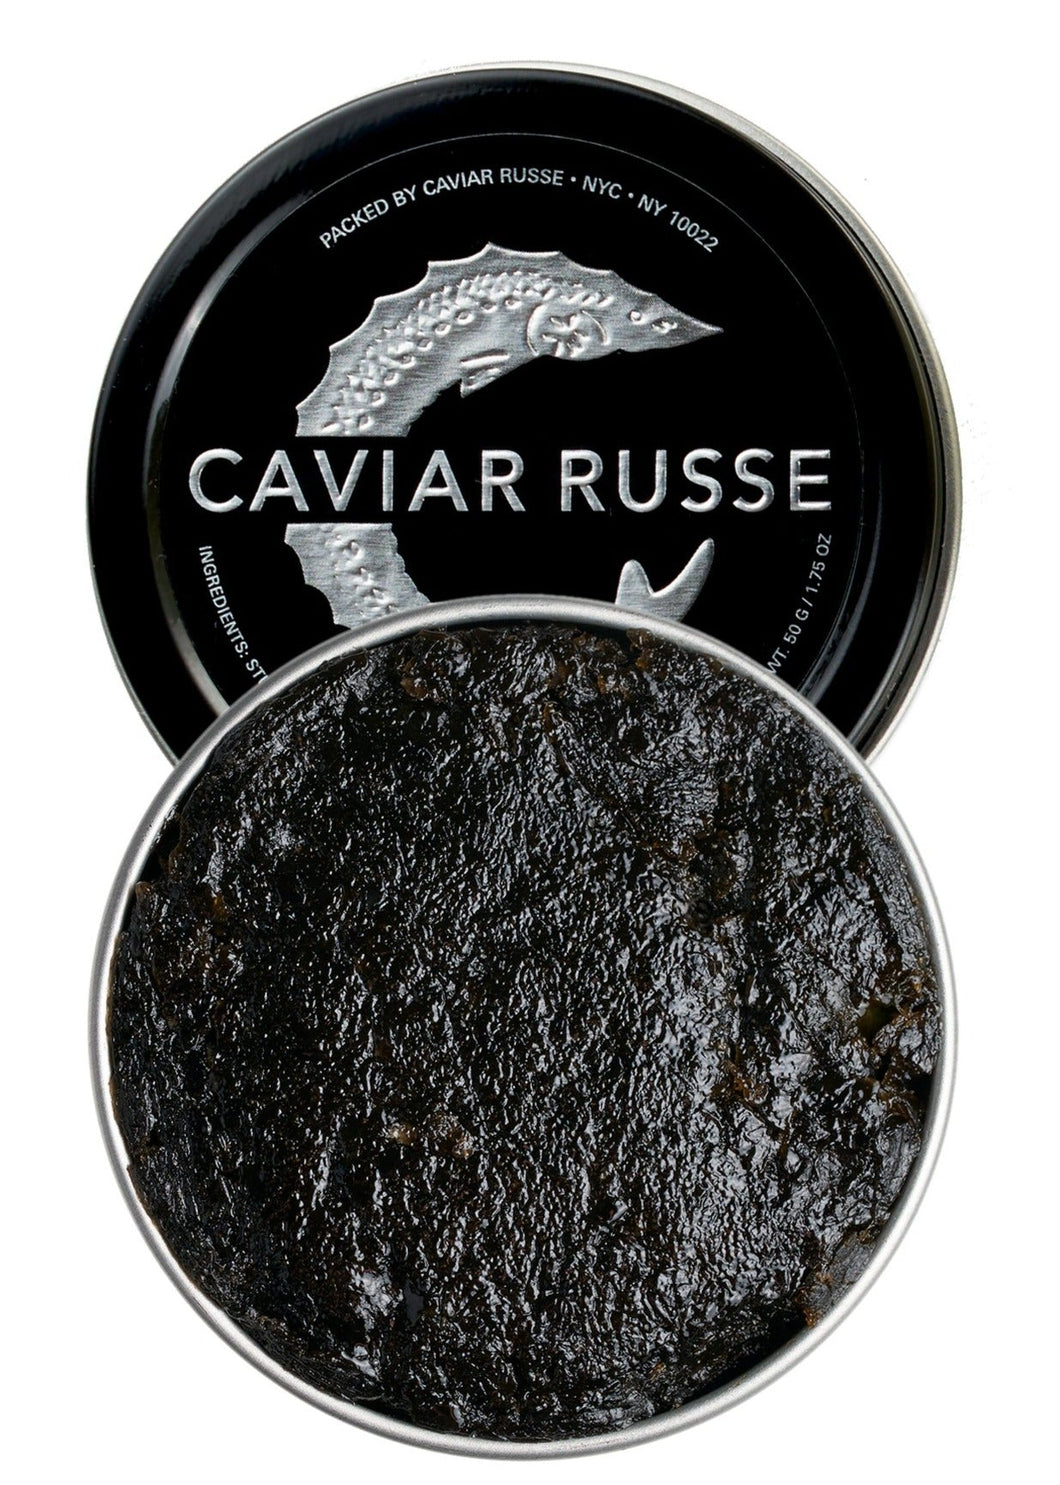 Pressed Caviar - Caviar Russe